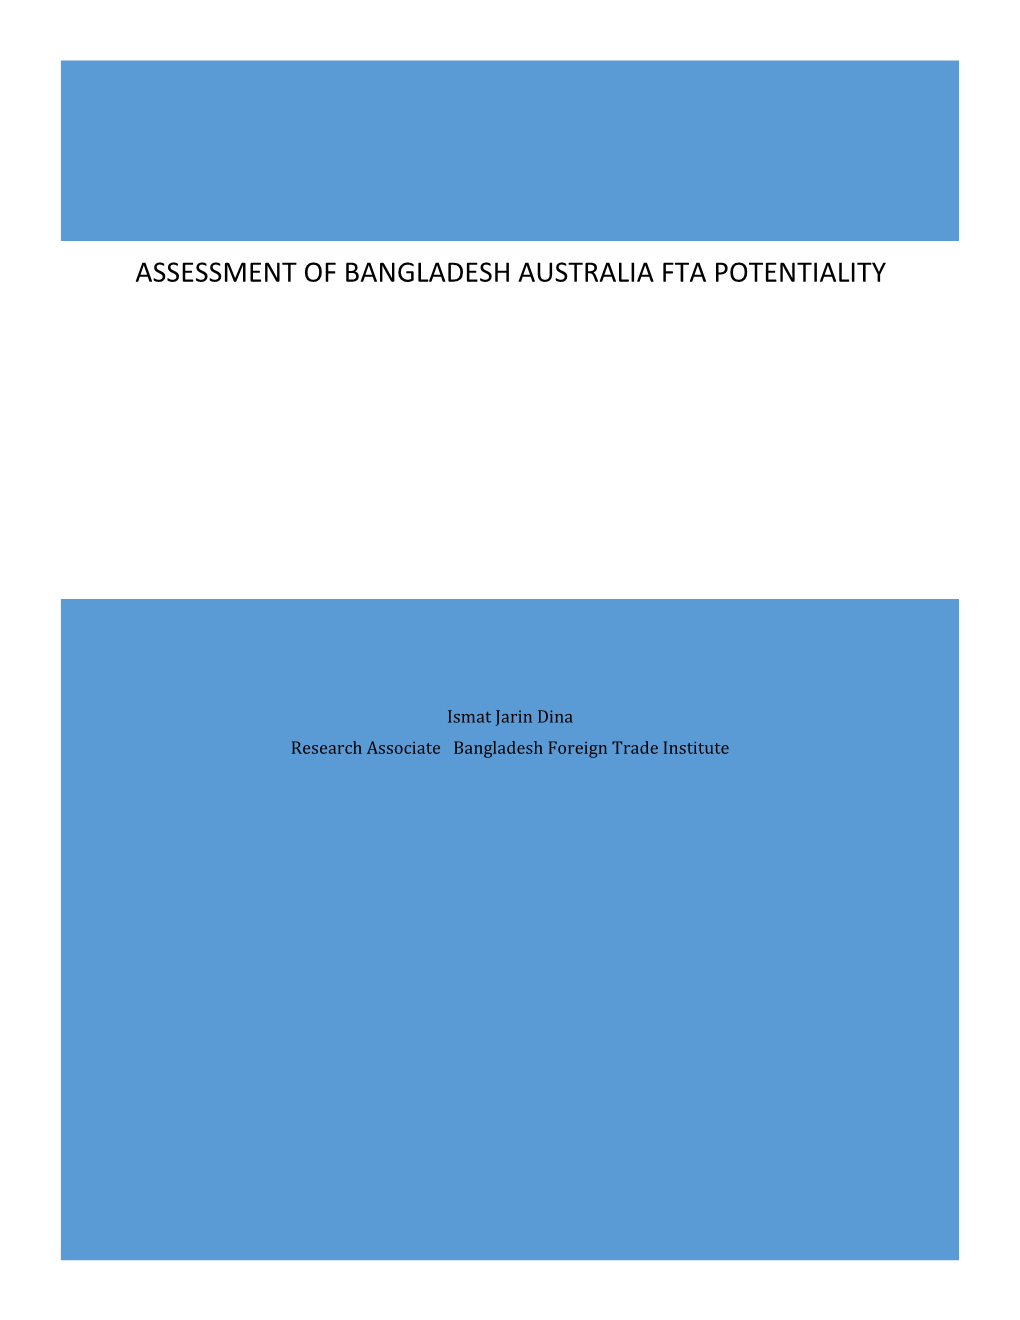 Assessment of Bangladesh Australia Fta Potentiality